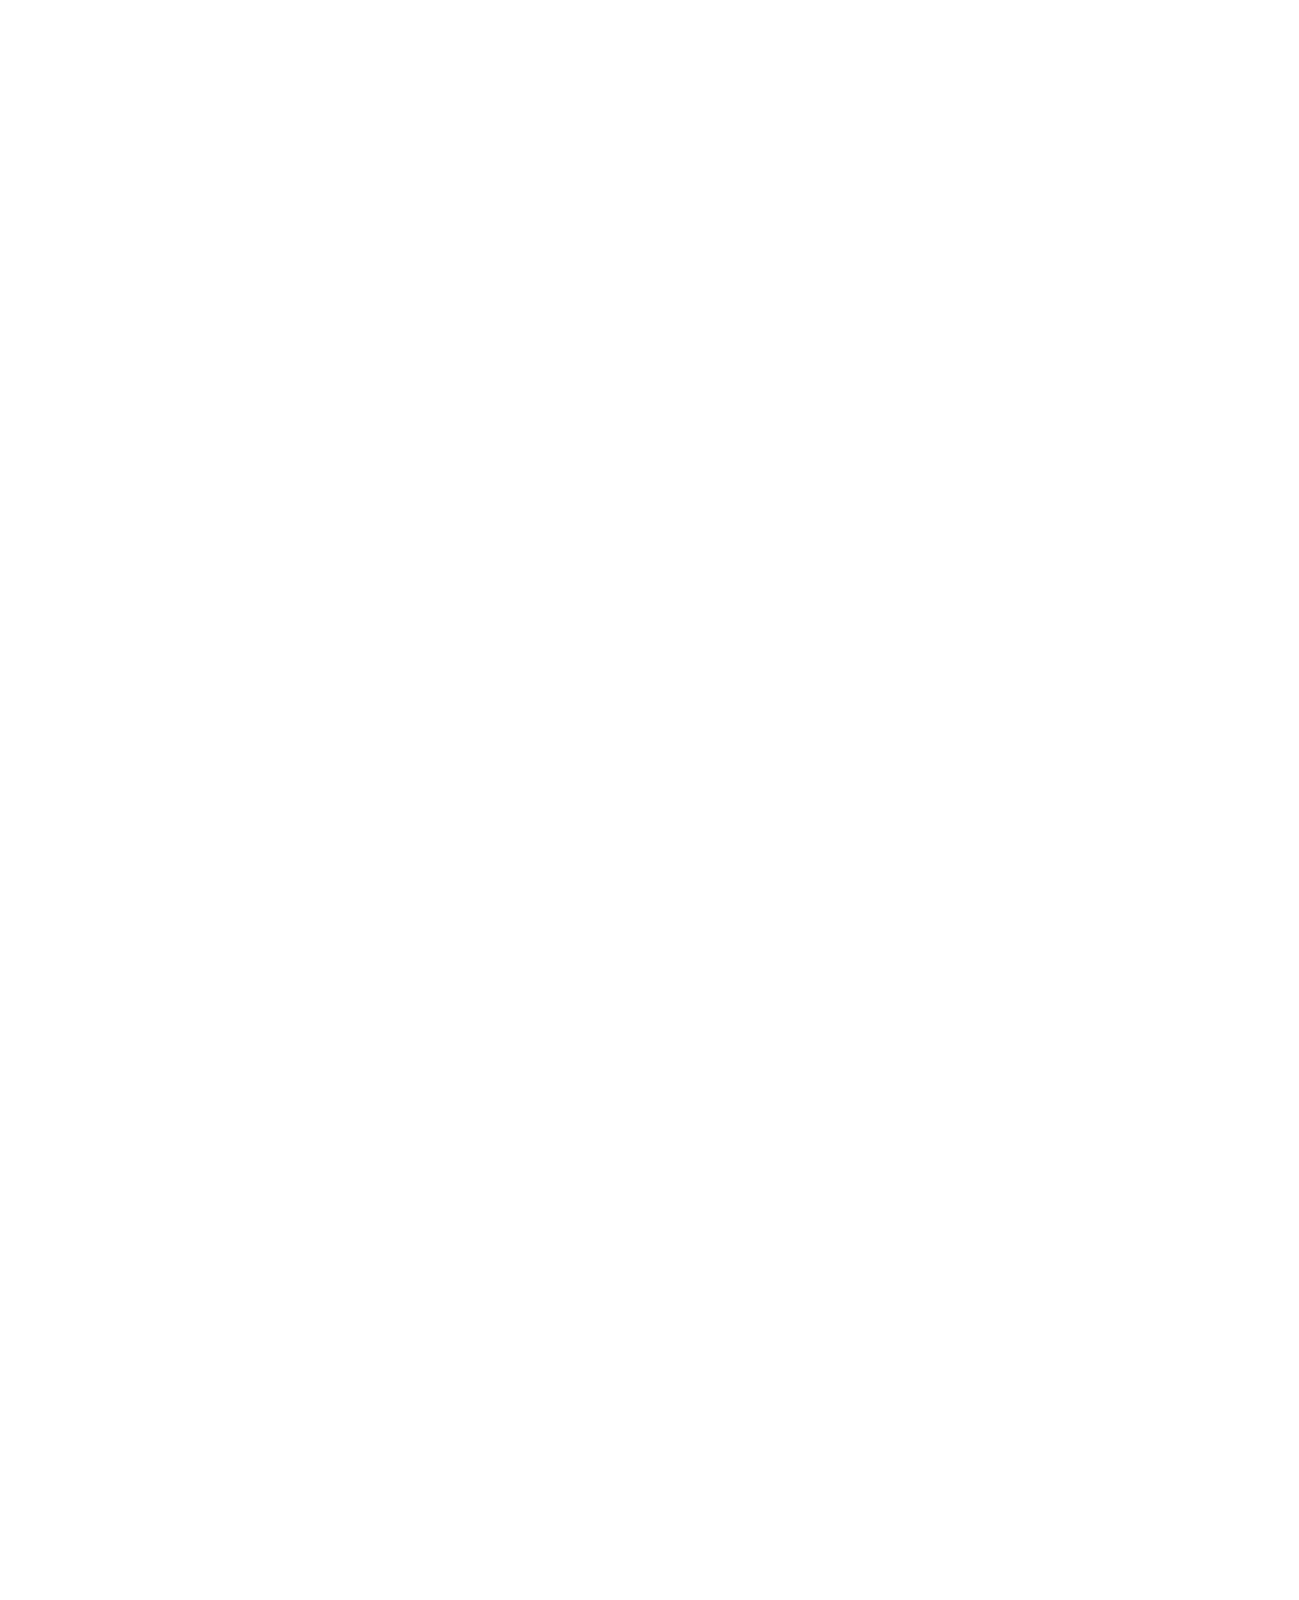 Communicator-Awards-Mobile-excellence-White